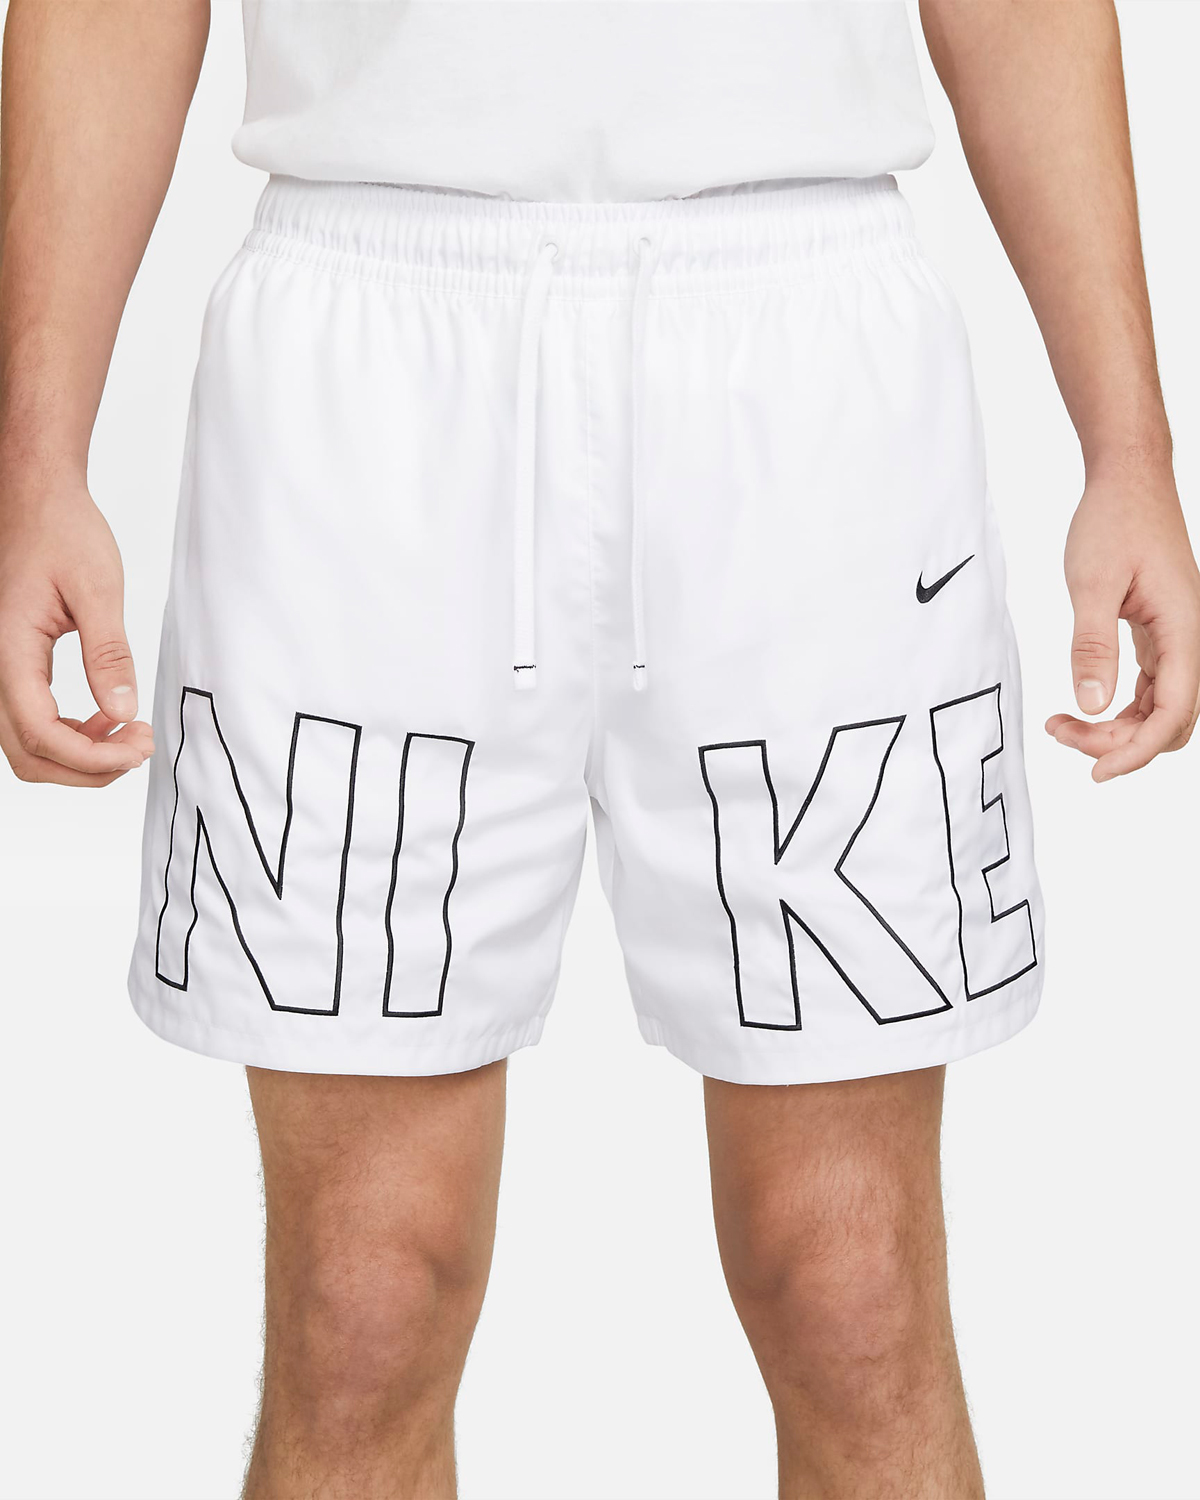 Nike-Sportswear-Woven-Flow-Graphic-Shorts-White-Black